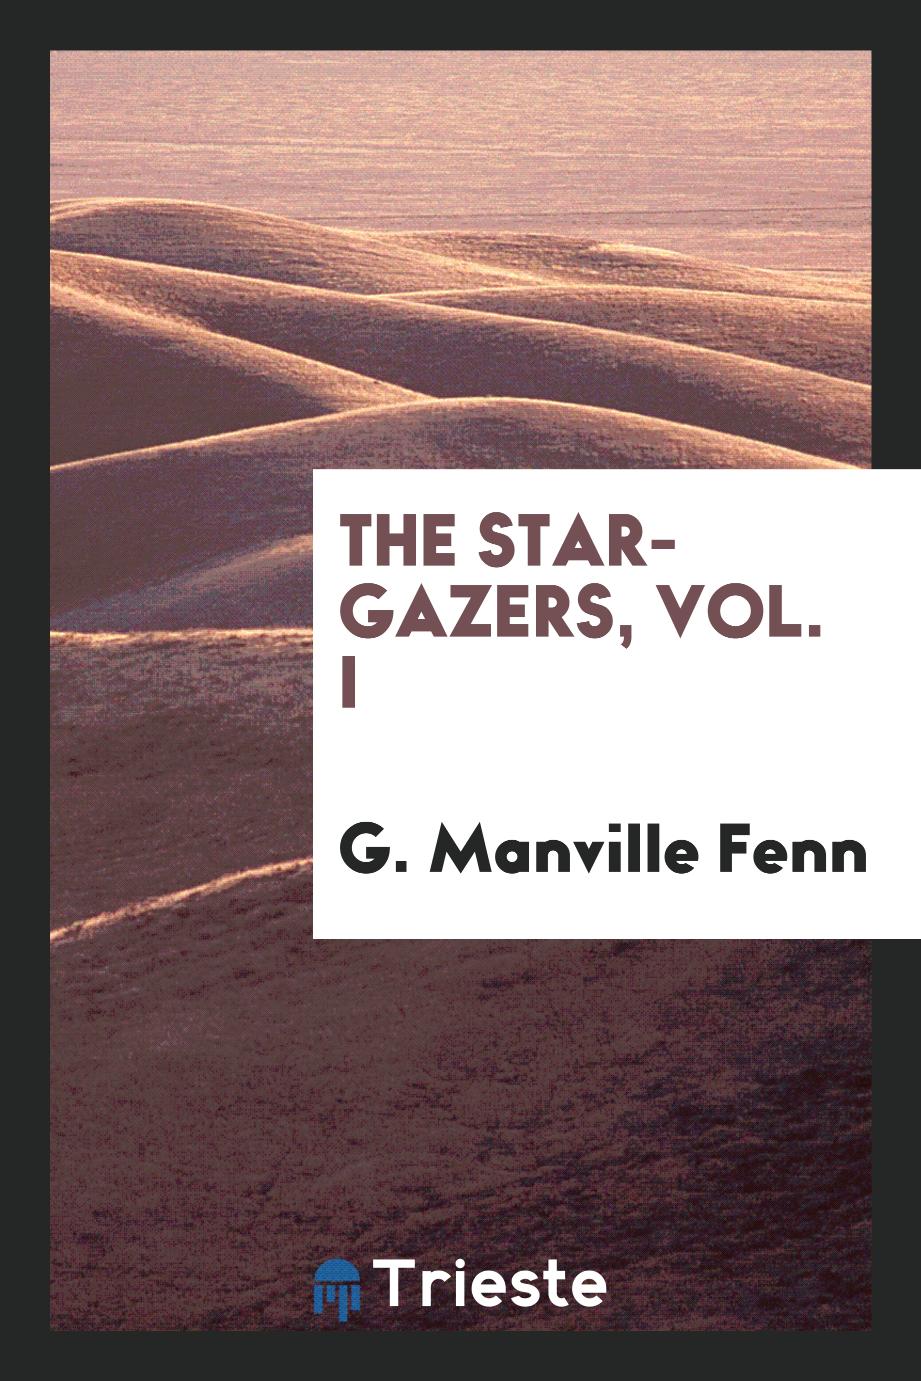 The star-gazers, Vol. I